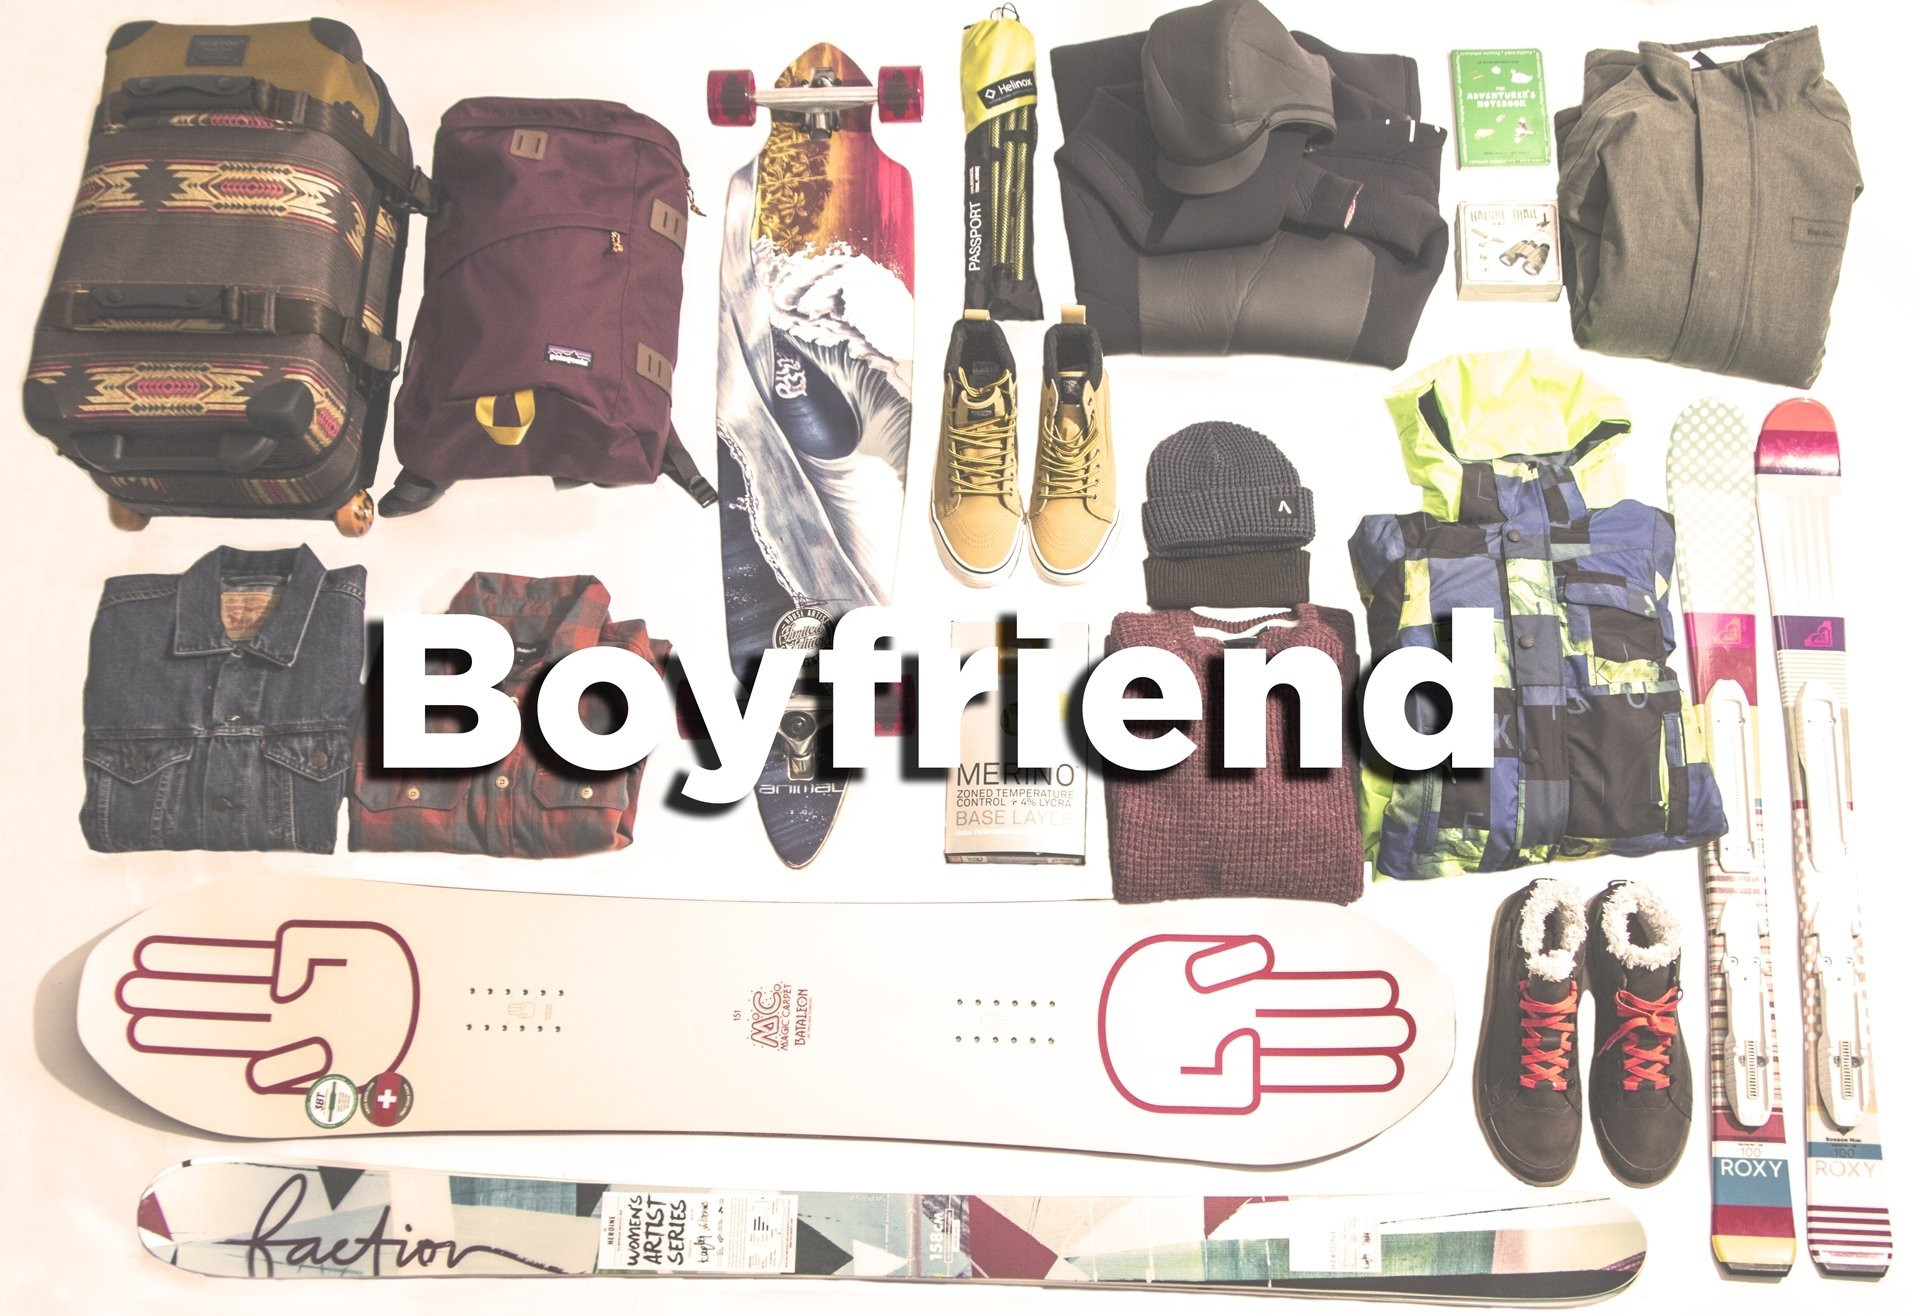 New Boyfriend Gift Ideas
 10 Fashionable Christmas Gift Ideas For New Boyfriend 2020